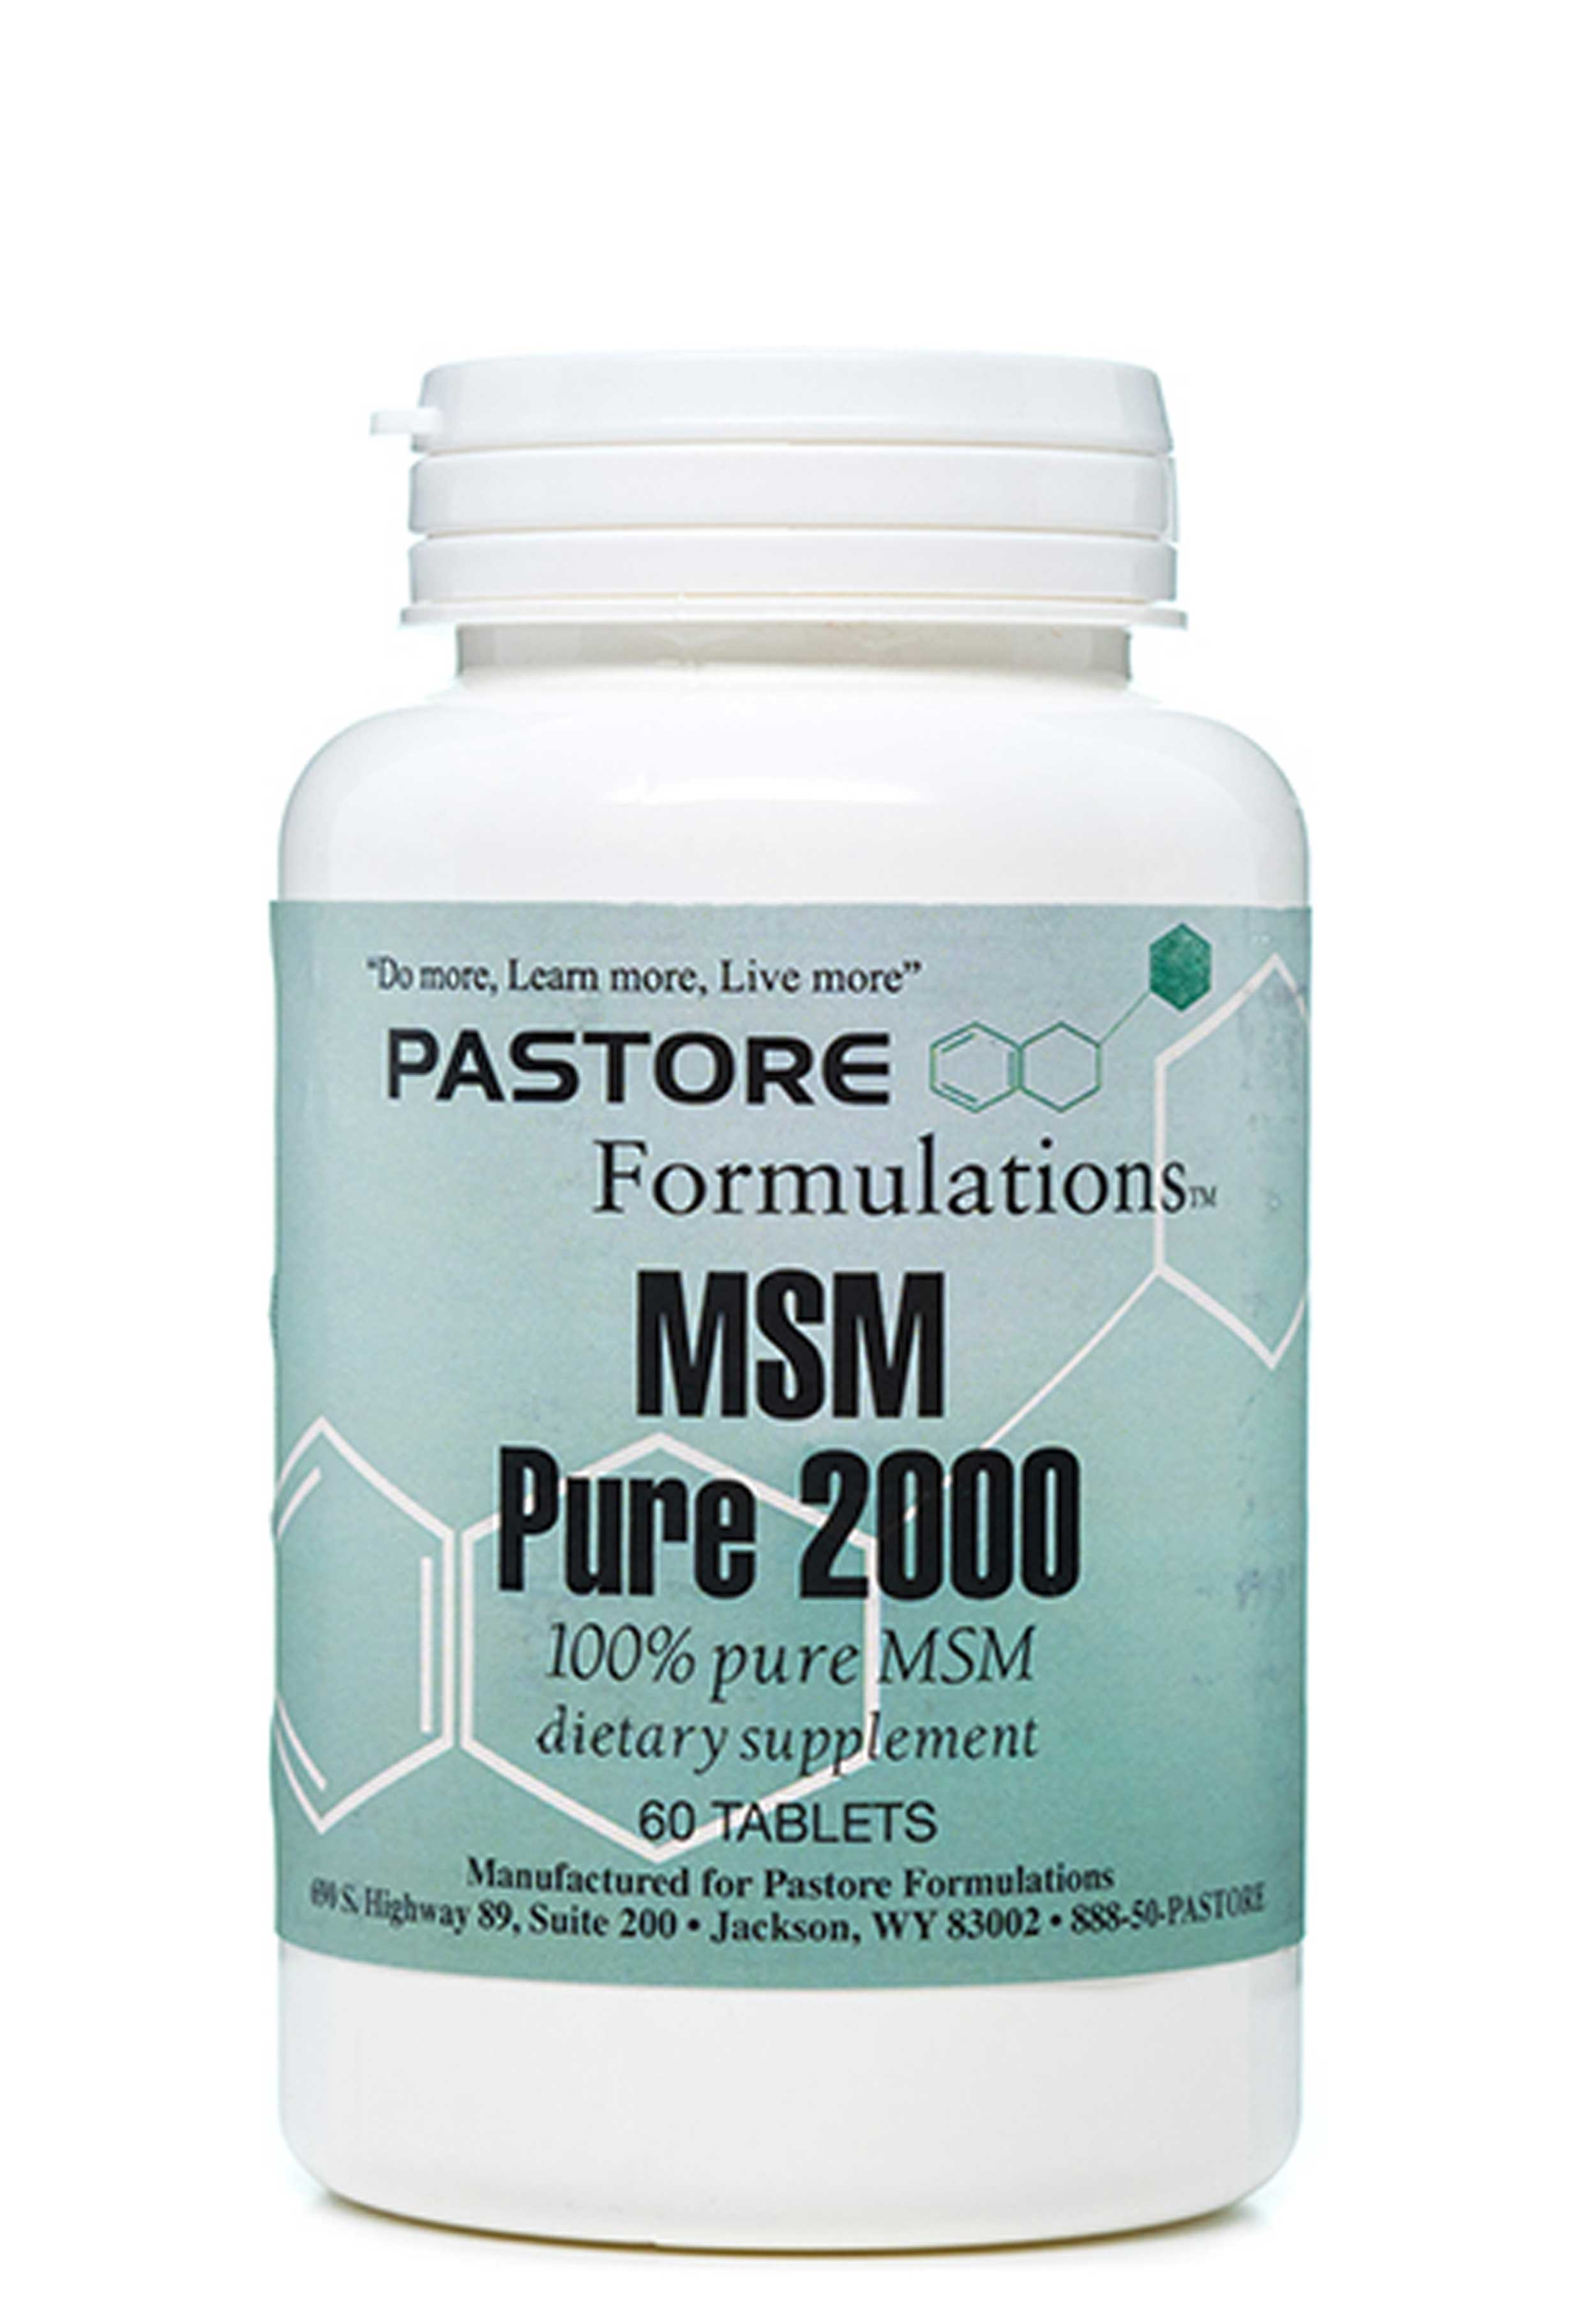 Pastore Formulations MSM Pure 2000